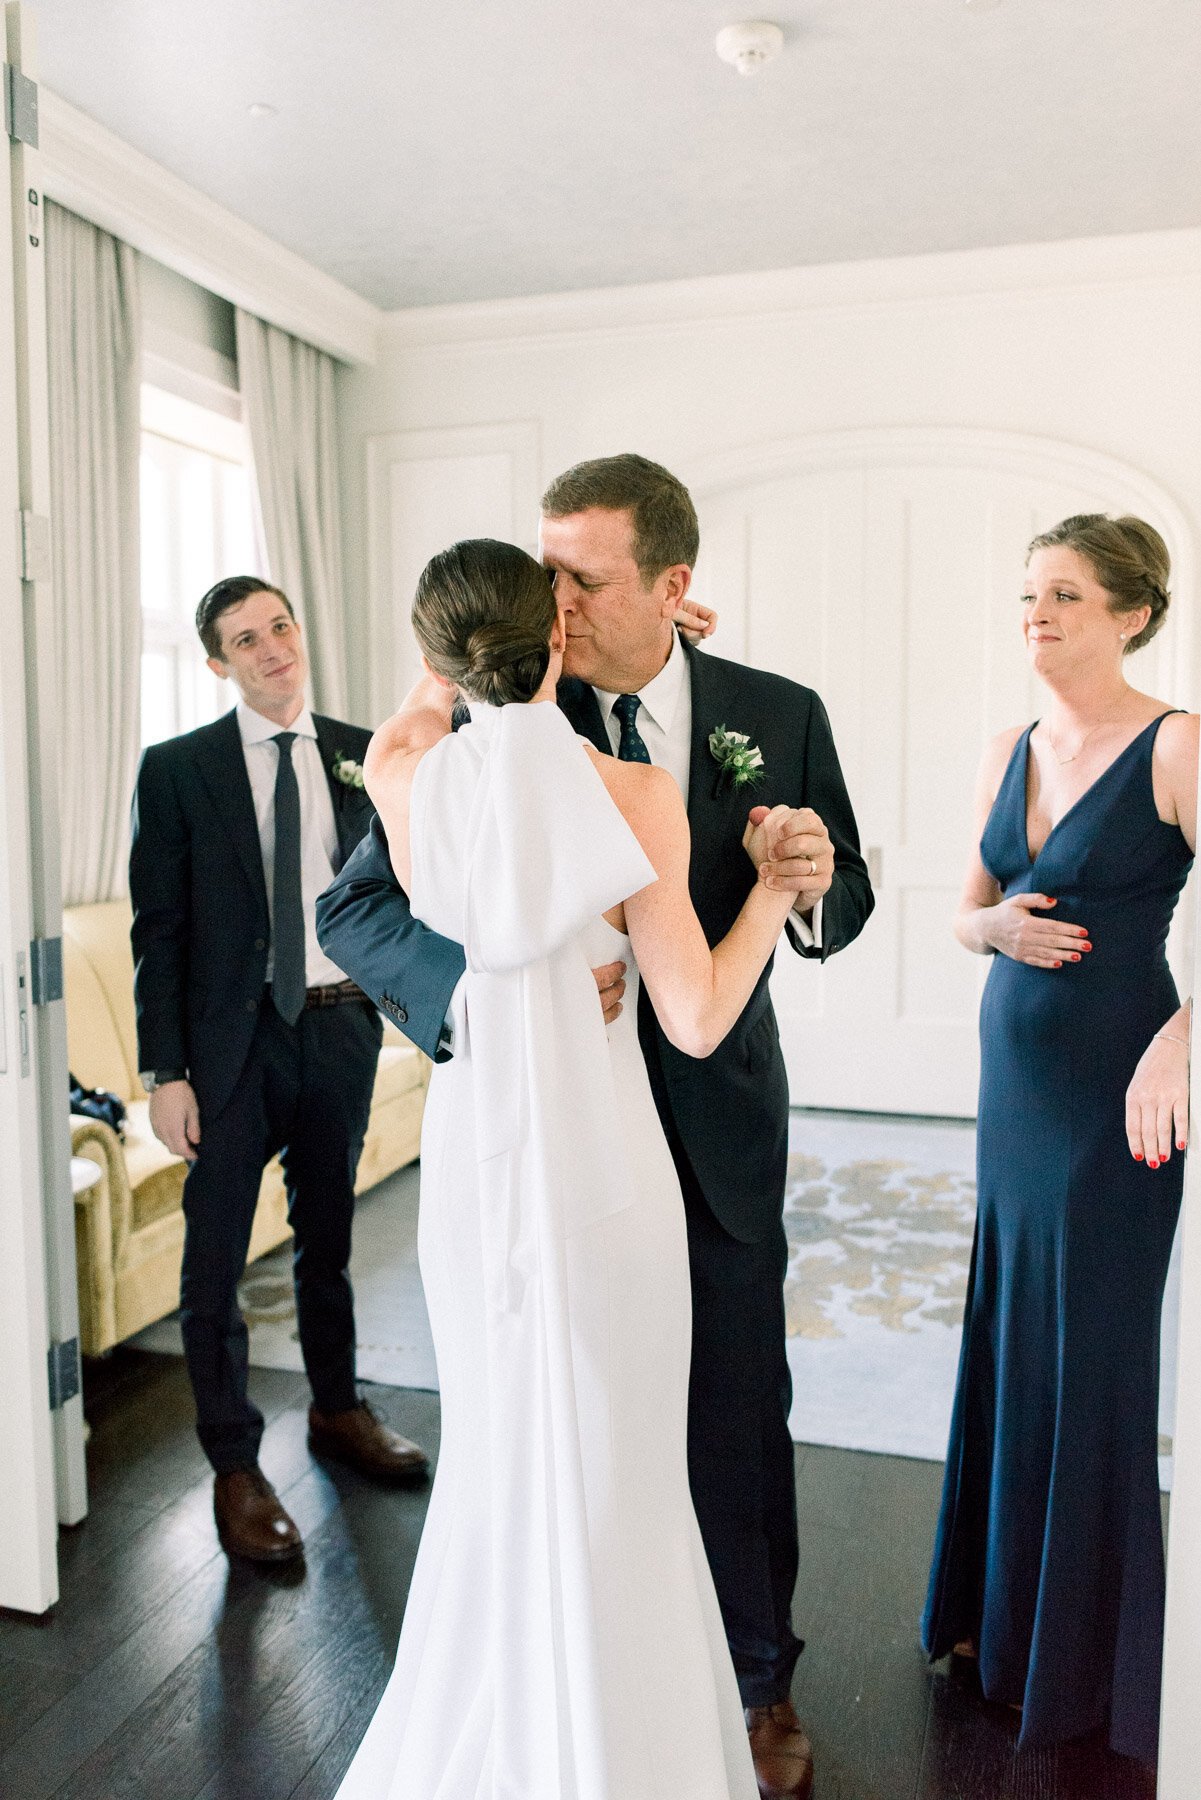 Adelphi Saratoga Wedding by Michelle Lange Photography-15.jpg